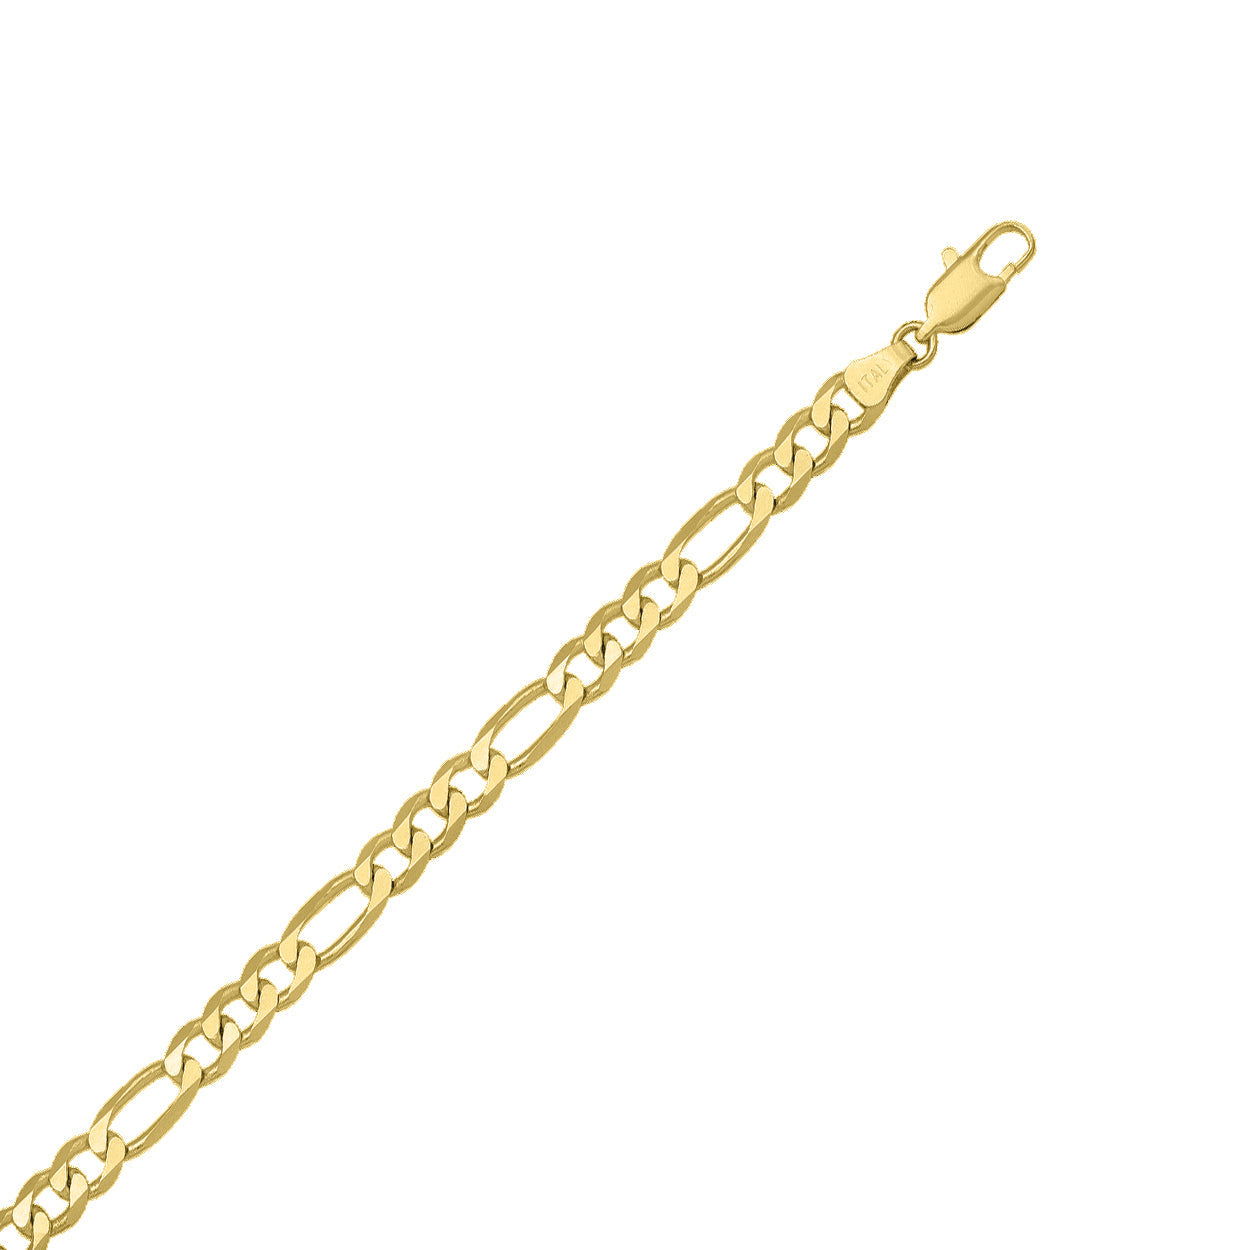 5mm Gold Figaro Style Bracelet